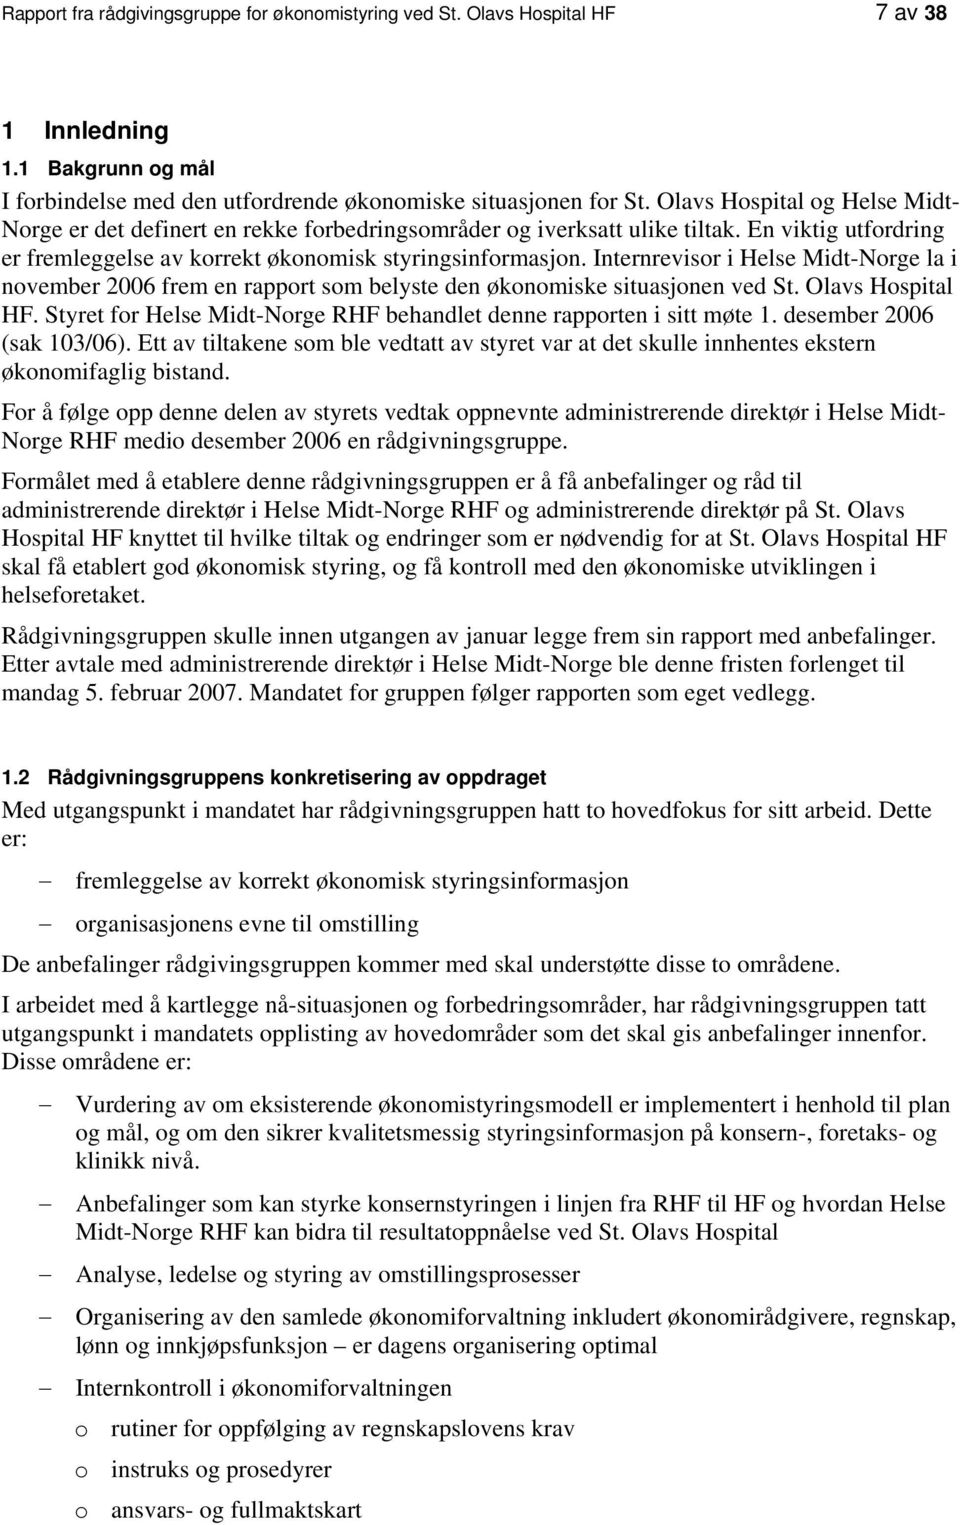 Internrevisr i Helse Midt-Nrge la i nvember 2006 frem en rapprt sm belyste den øknmiske situasjnen ved St. Olavs Hspital HF. Styret fr Helse Midt-Nrge RHF behandlet denne rapprten i sitt møte 1.